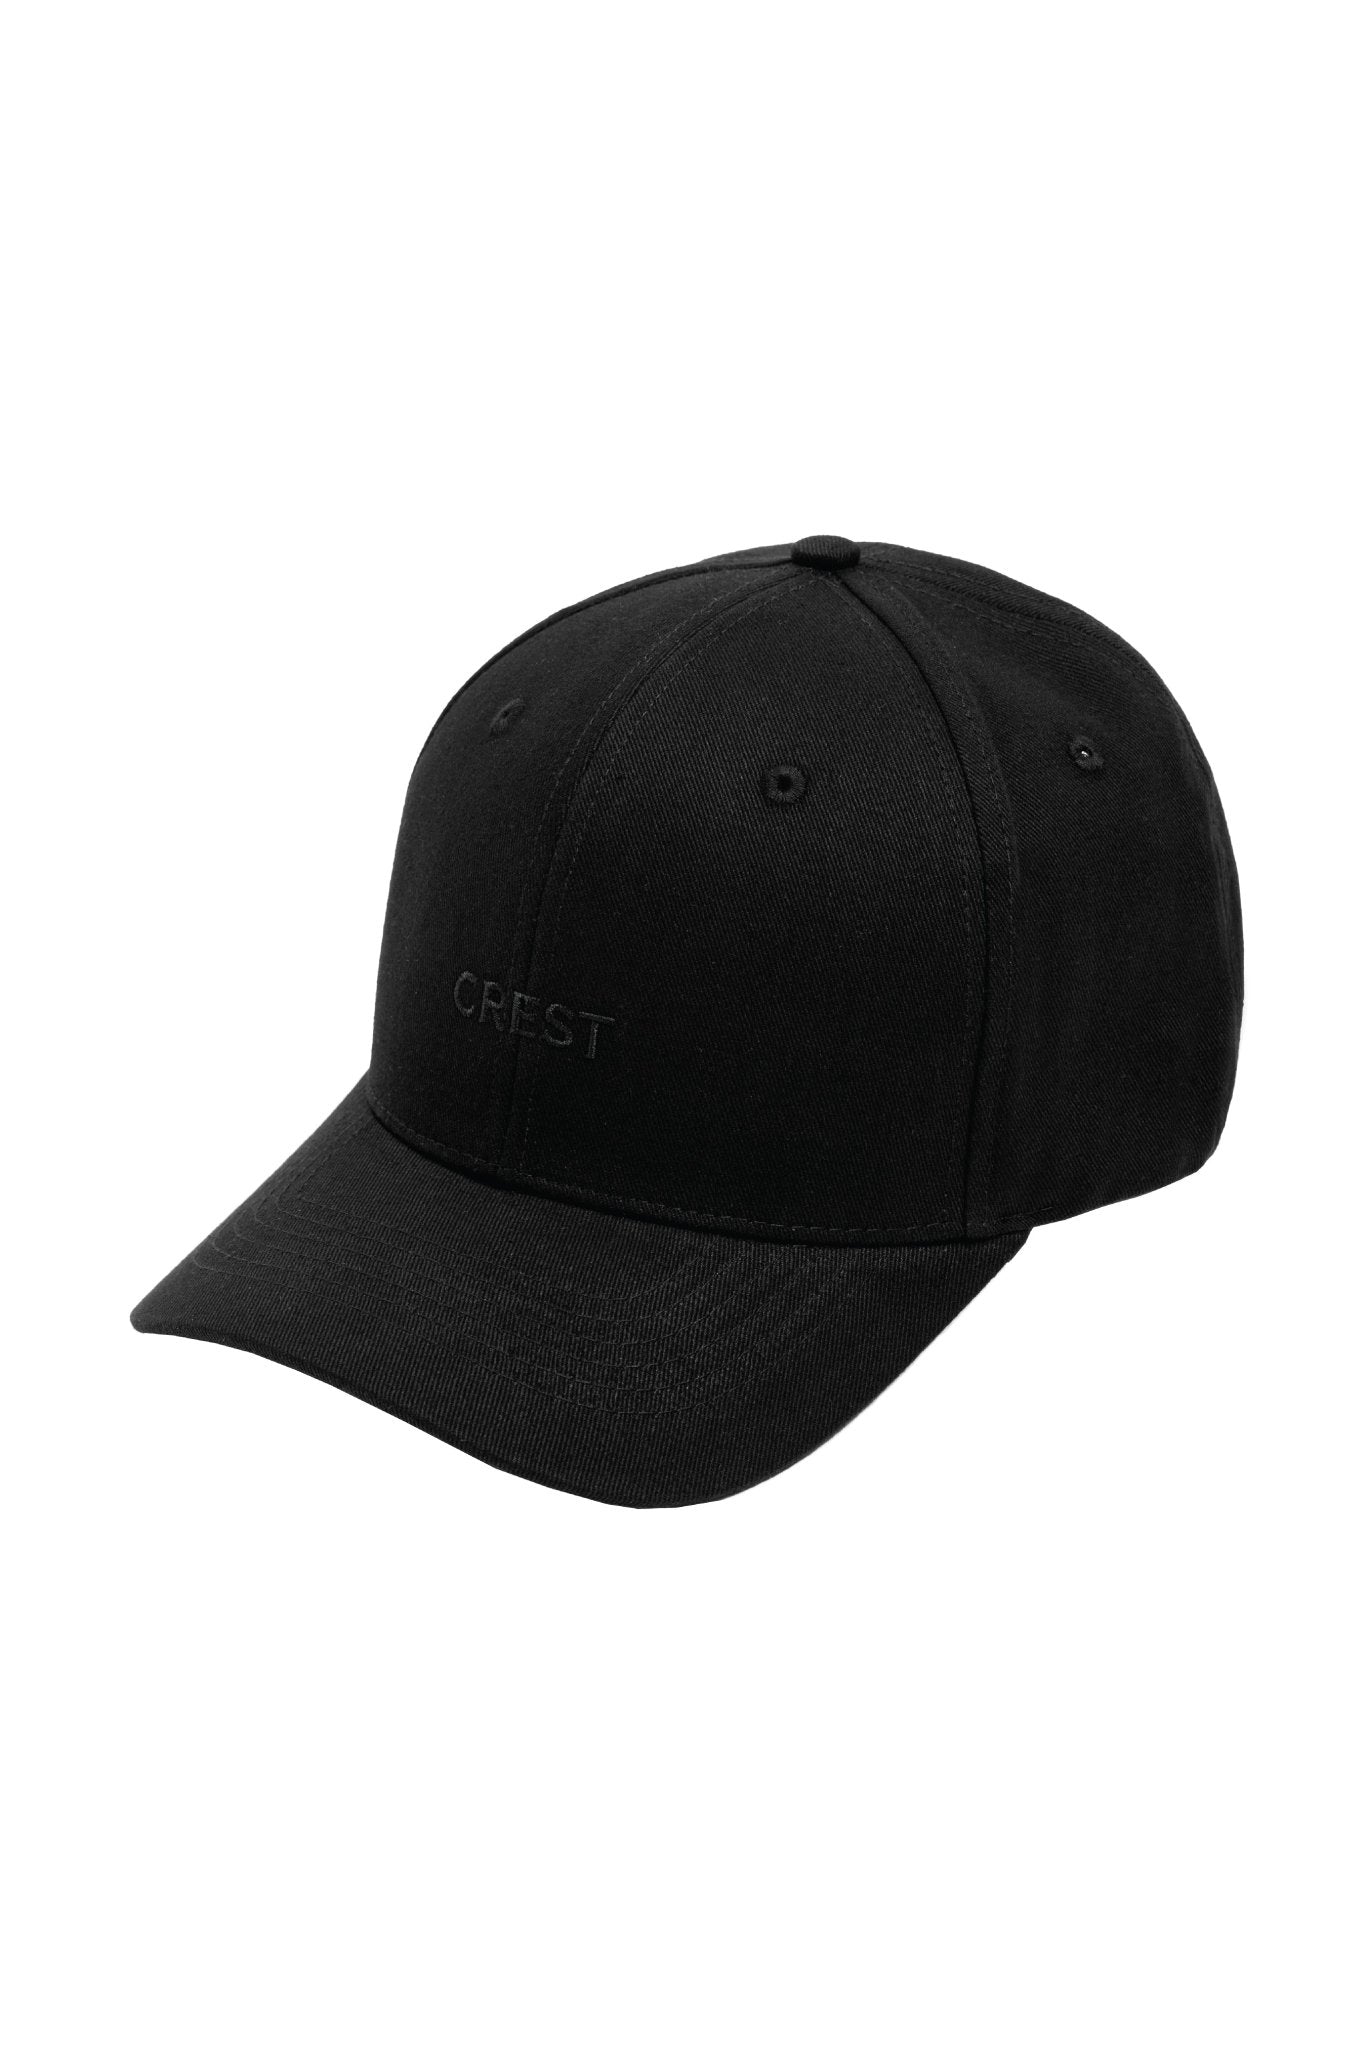 CREST - CREST Embroidery Trucker Hat - Black Logo